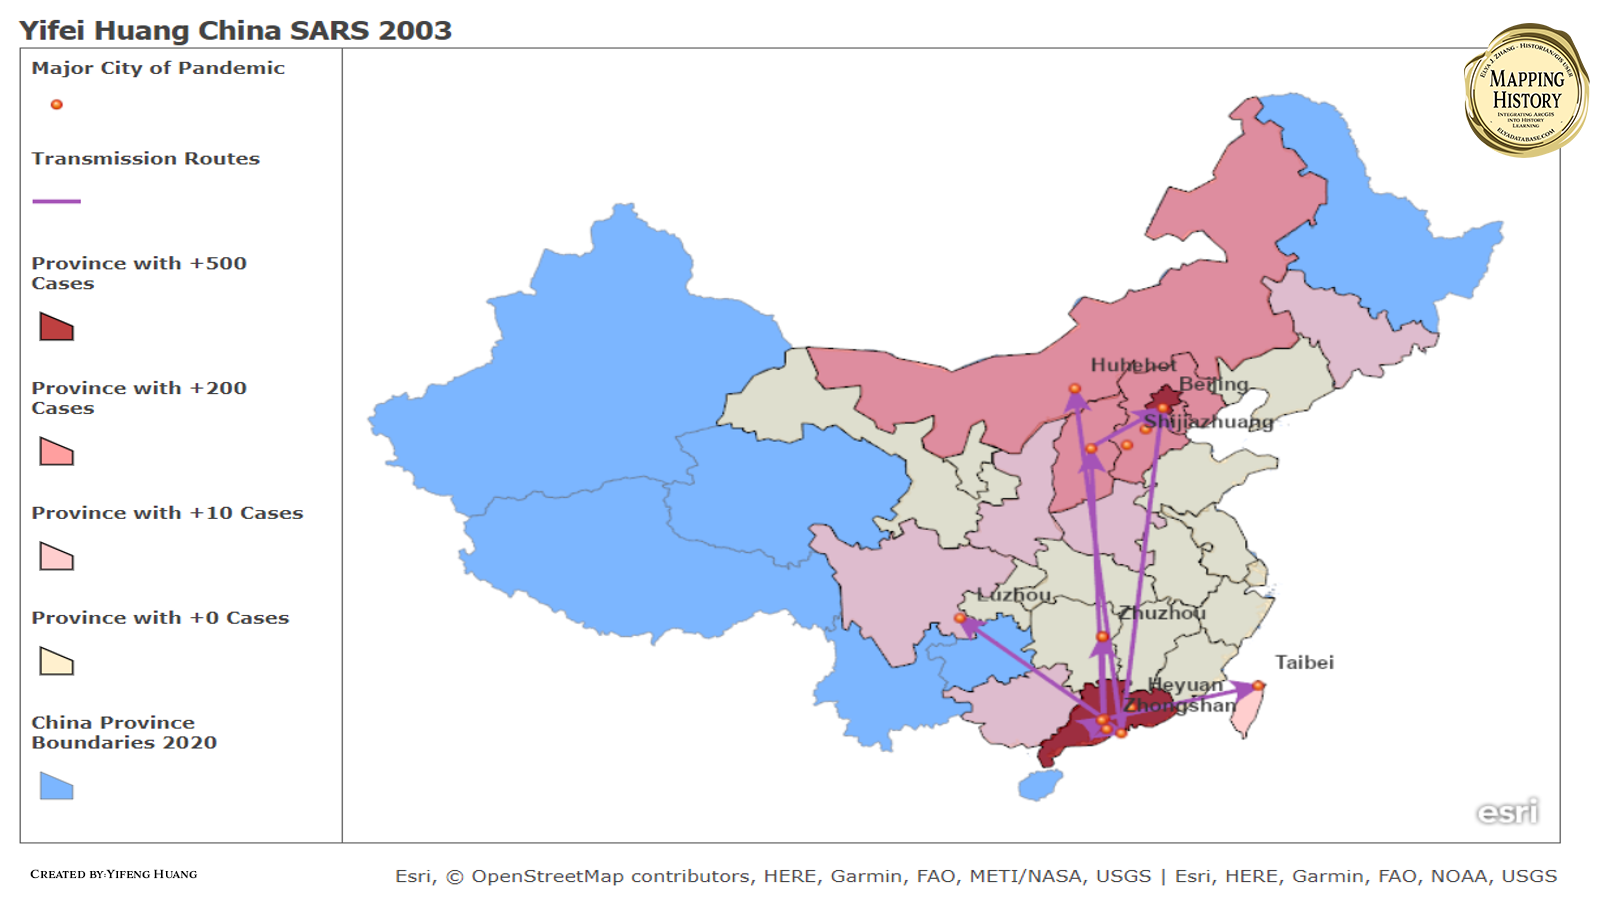 SARS in China 2003